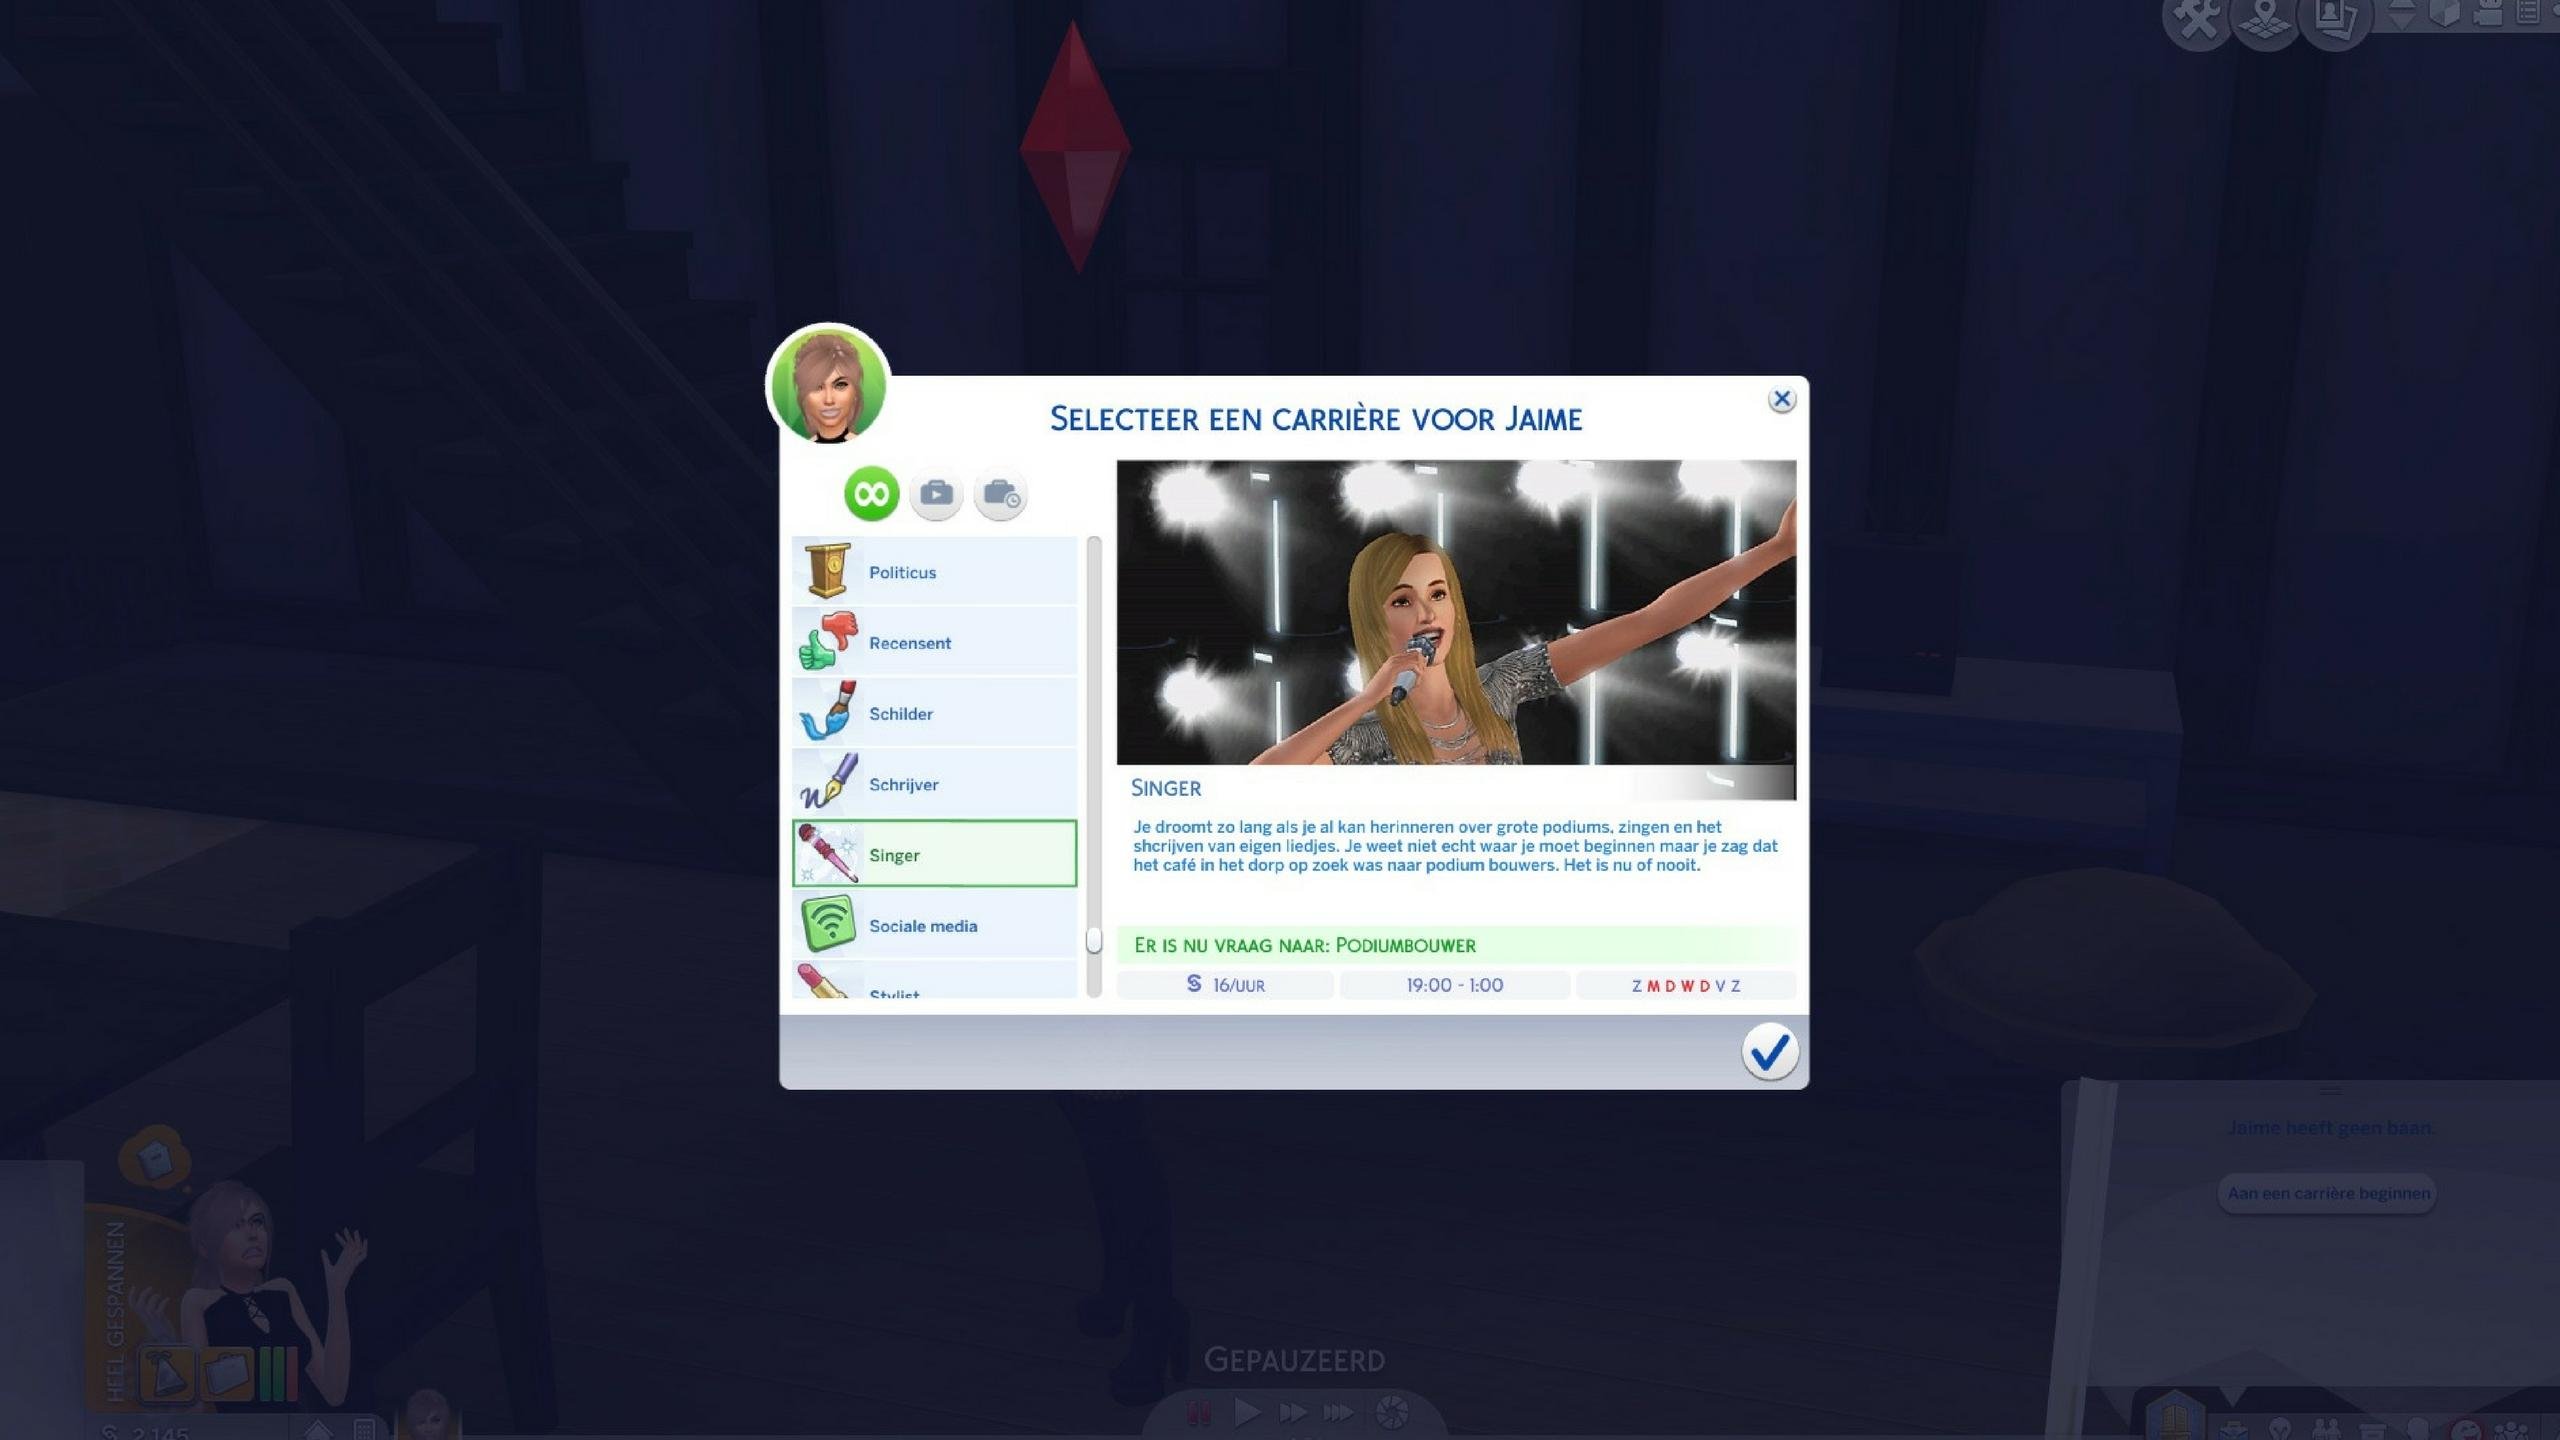 Sims 4 Job And Career Mods 2020 Snootysims